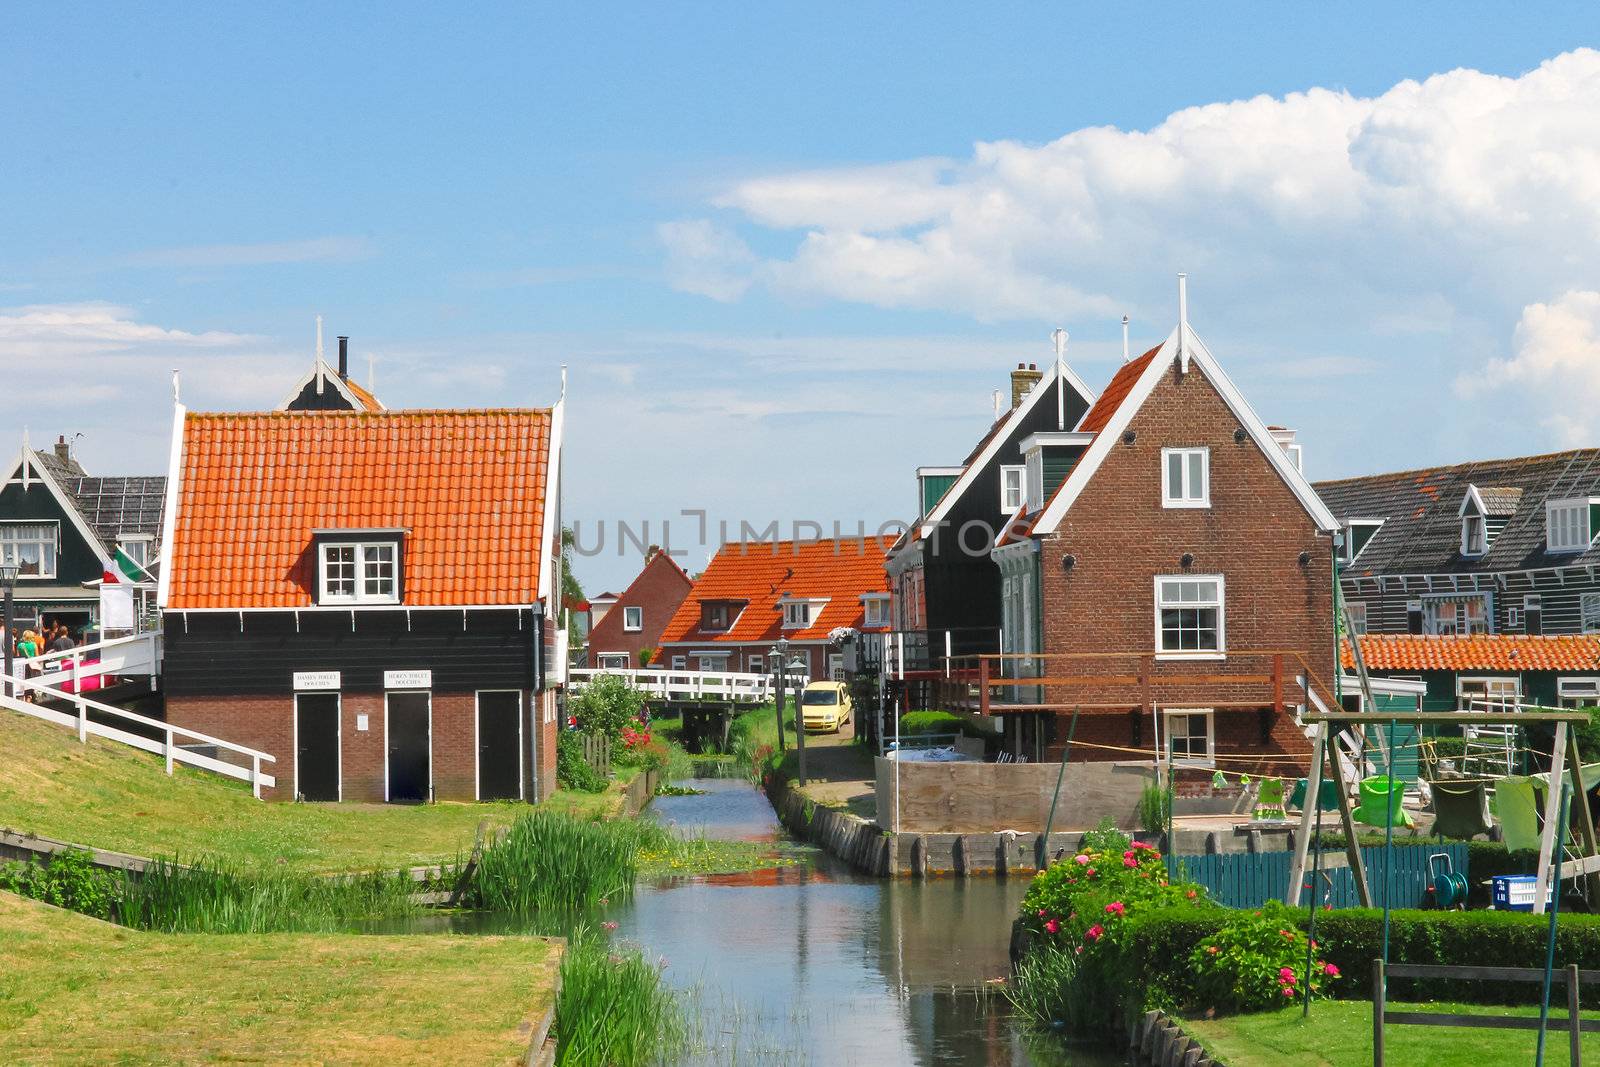 Rural street on the island Marken. Netherlands